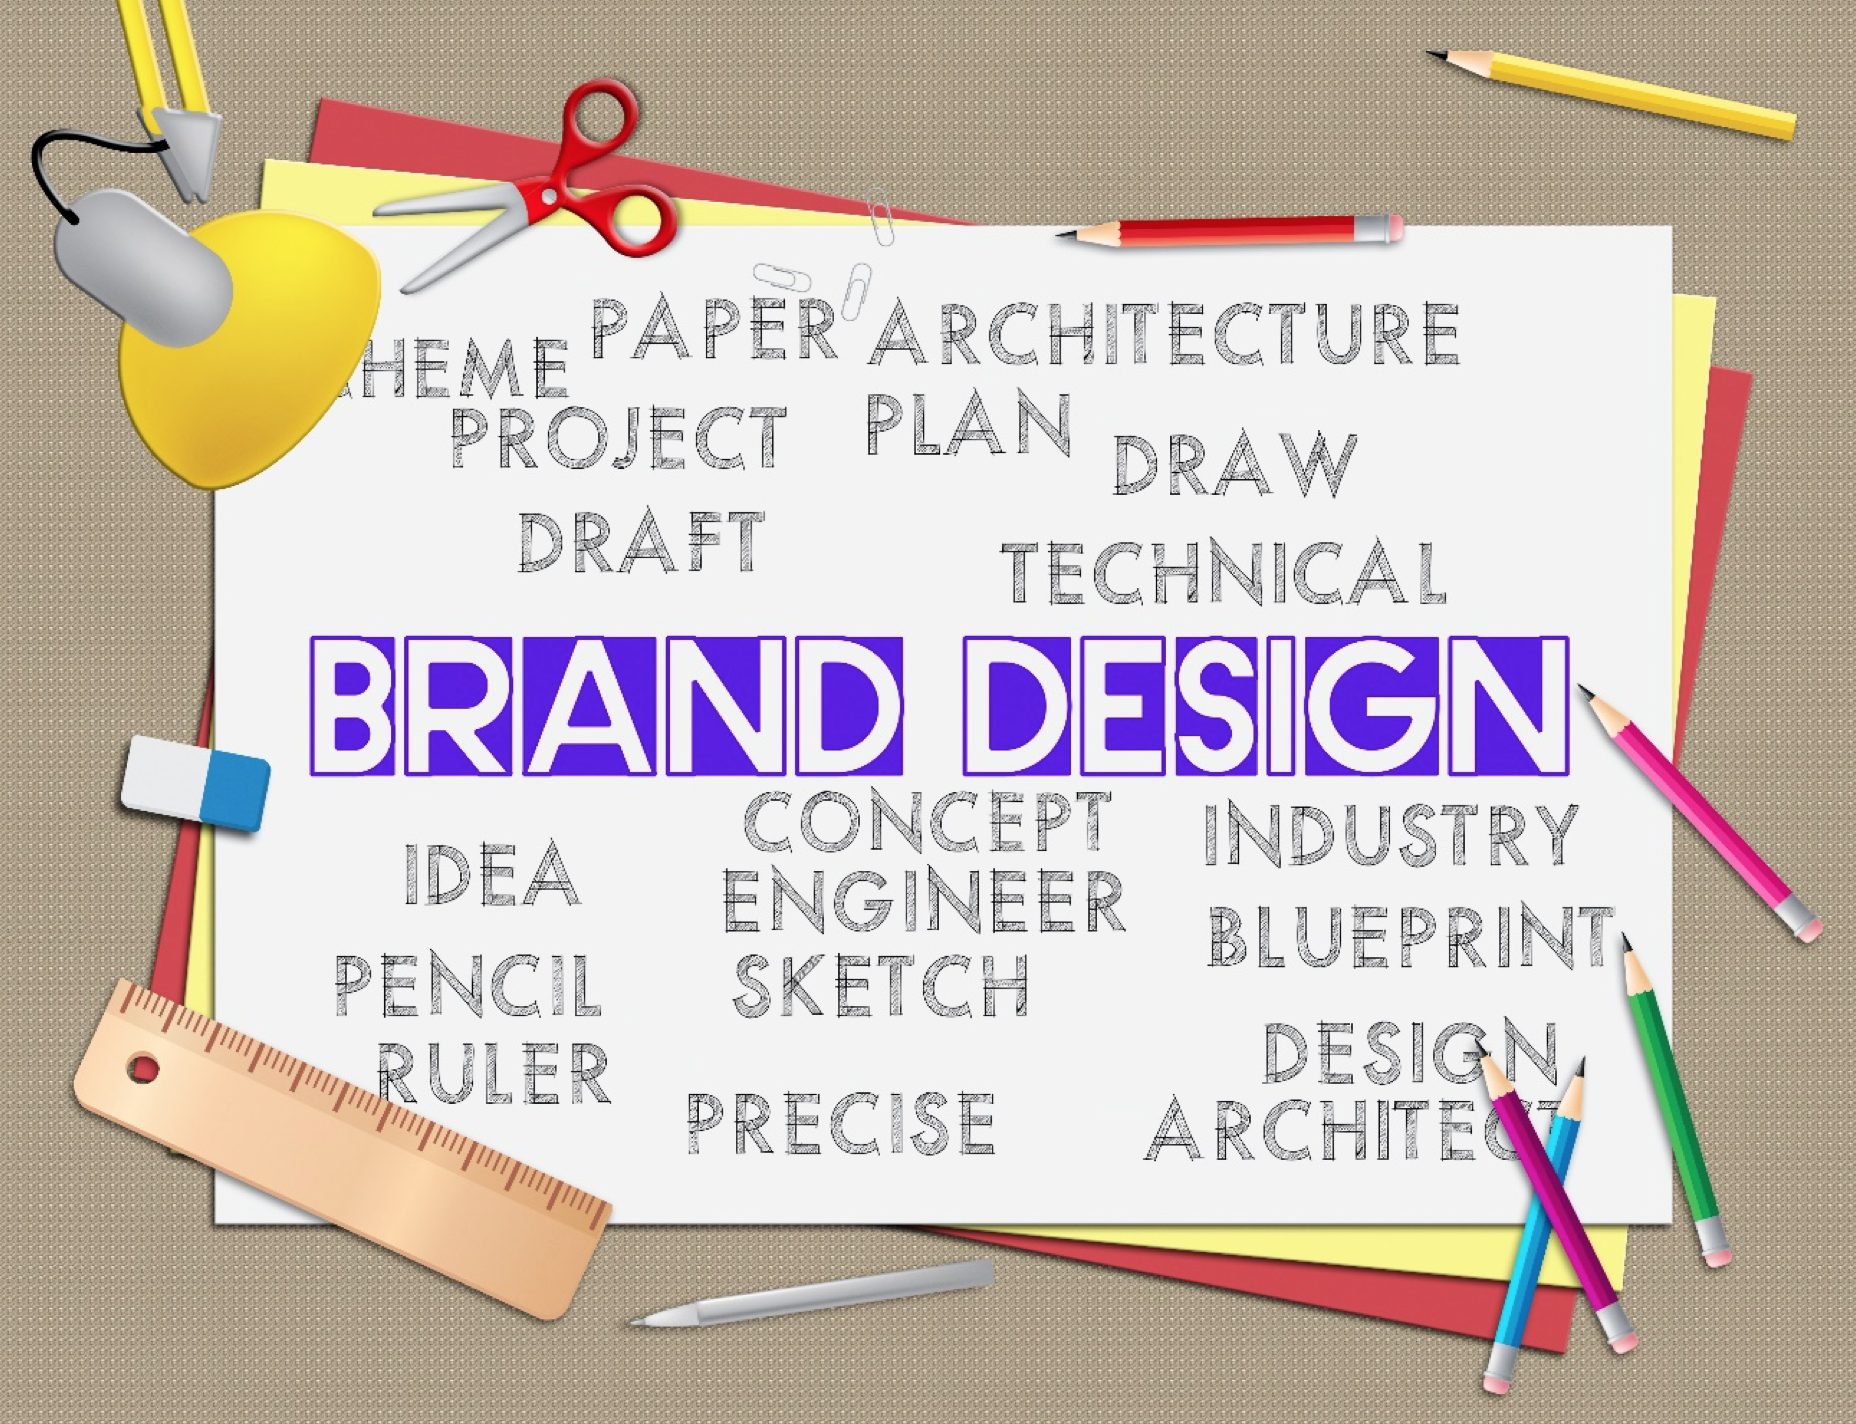 Brand Design indicates artwork idea and branding 